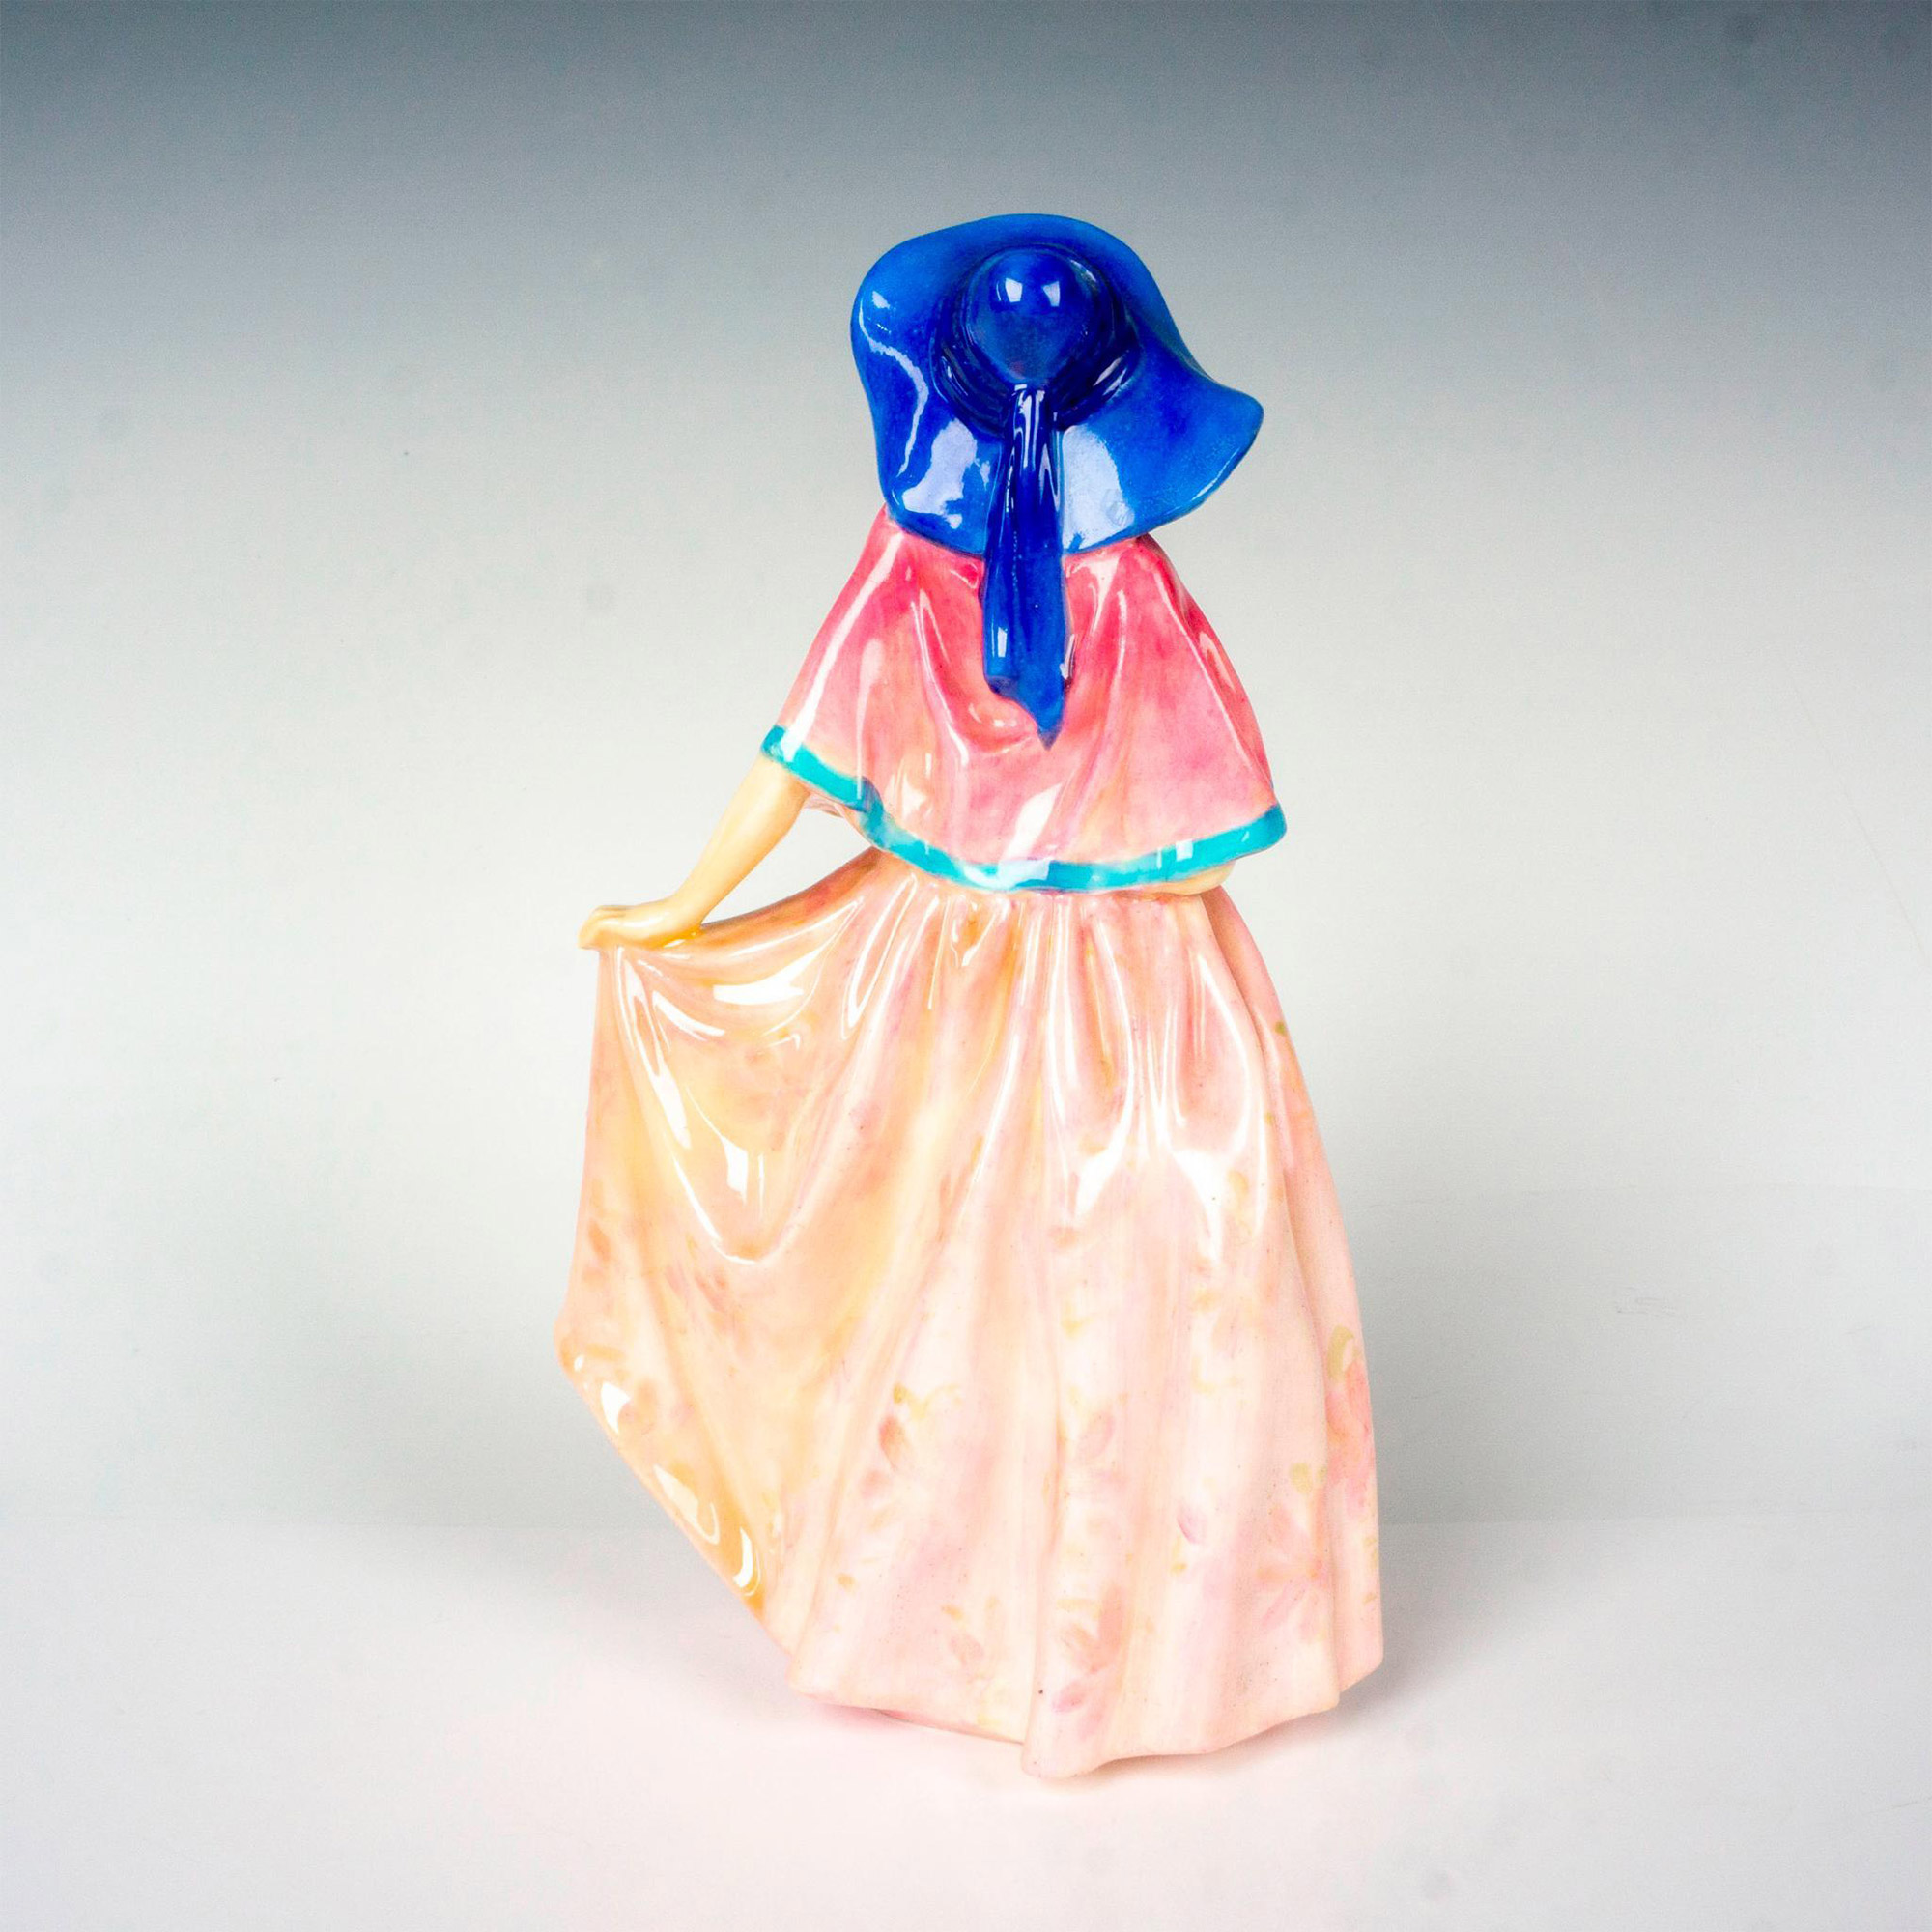 Nadine HN1886 - Royal Doulton Figurine - Image 2 of 3